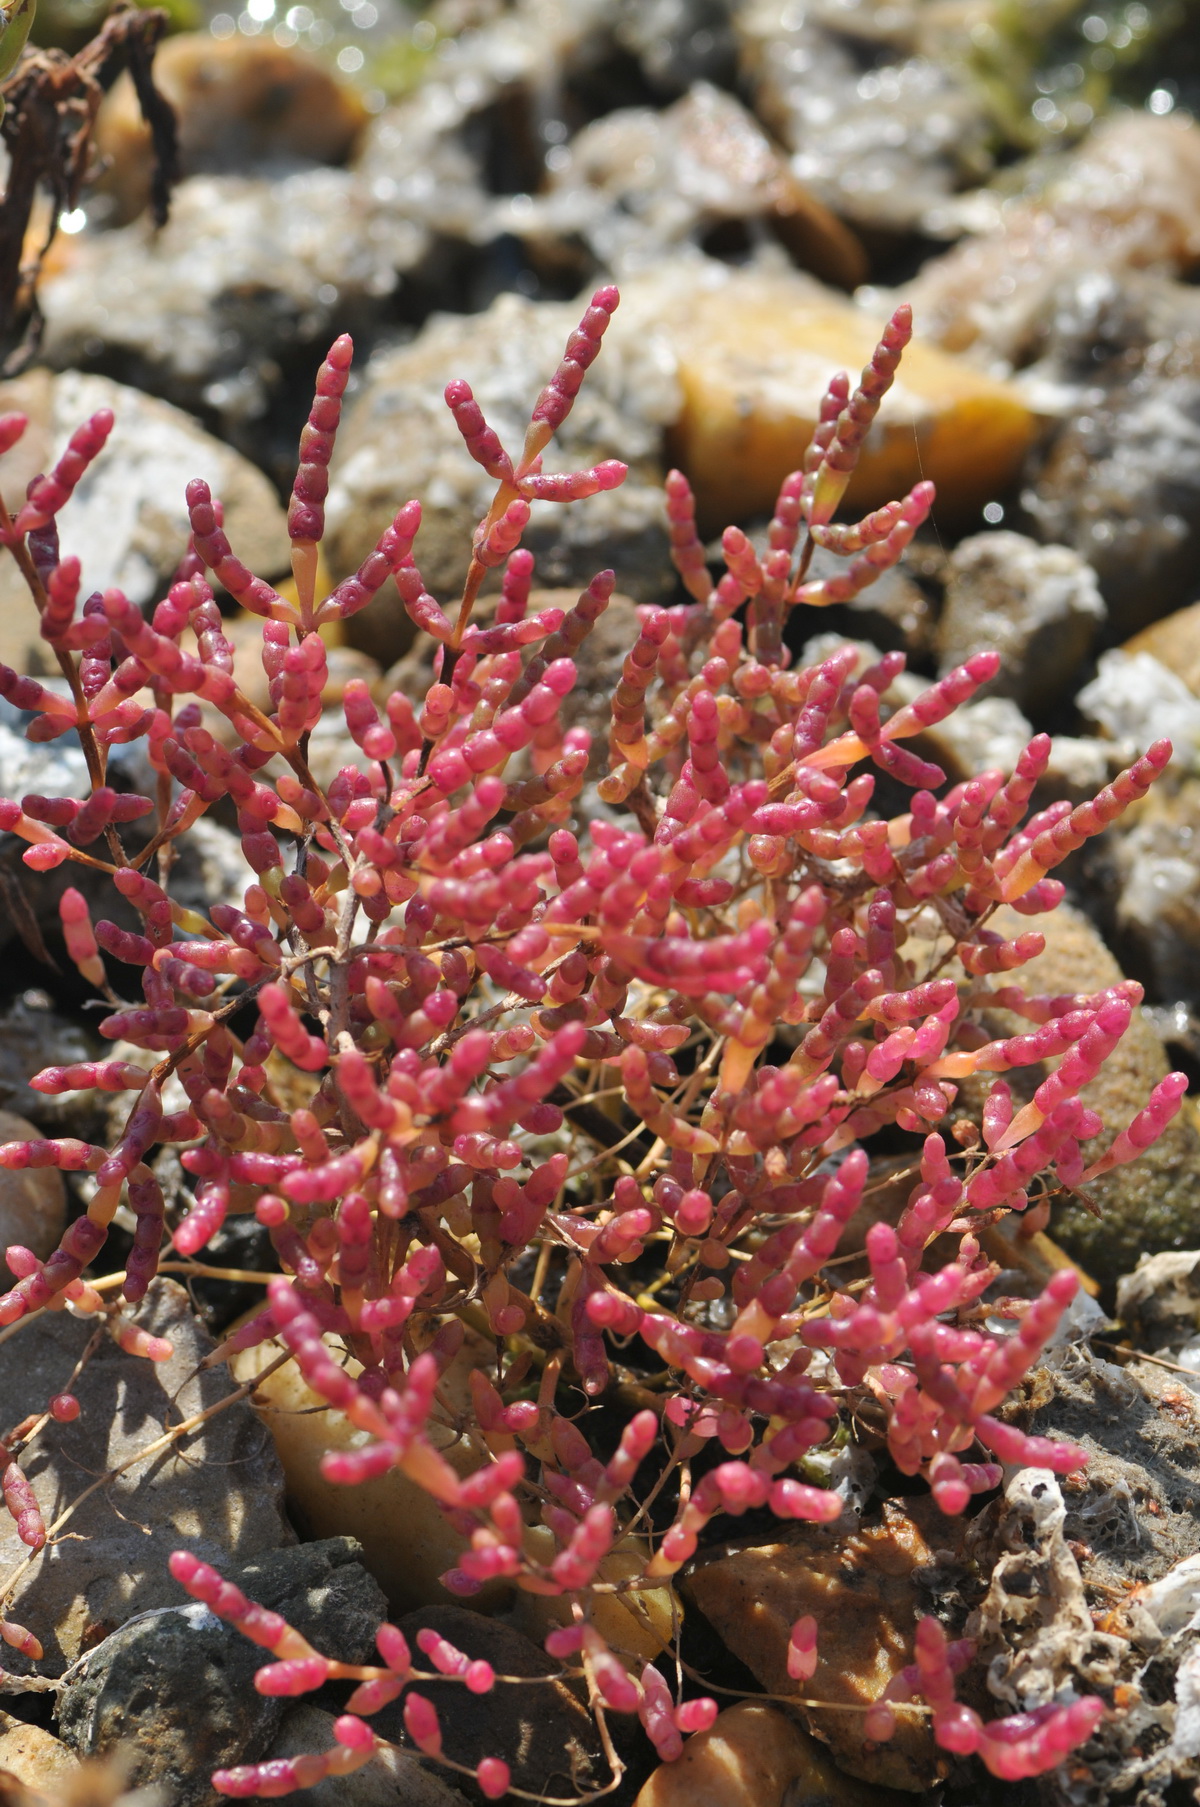 Salicornia europaea subsp. europaea (door Hans Toetenel)